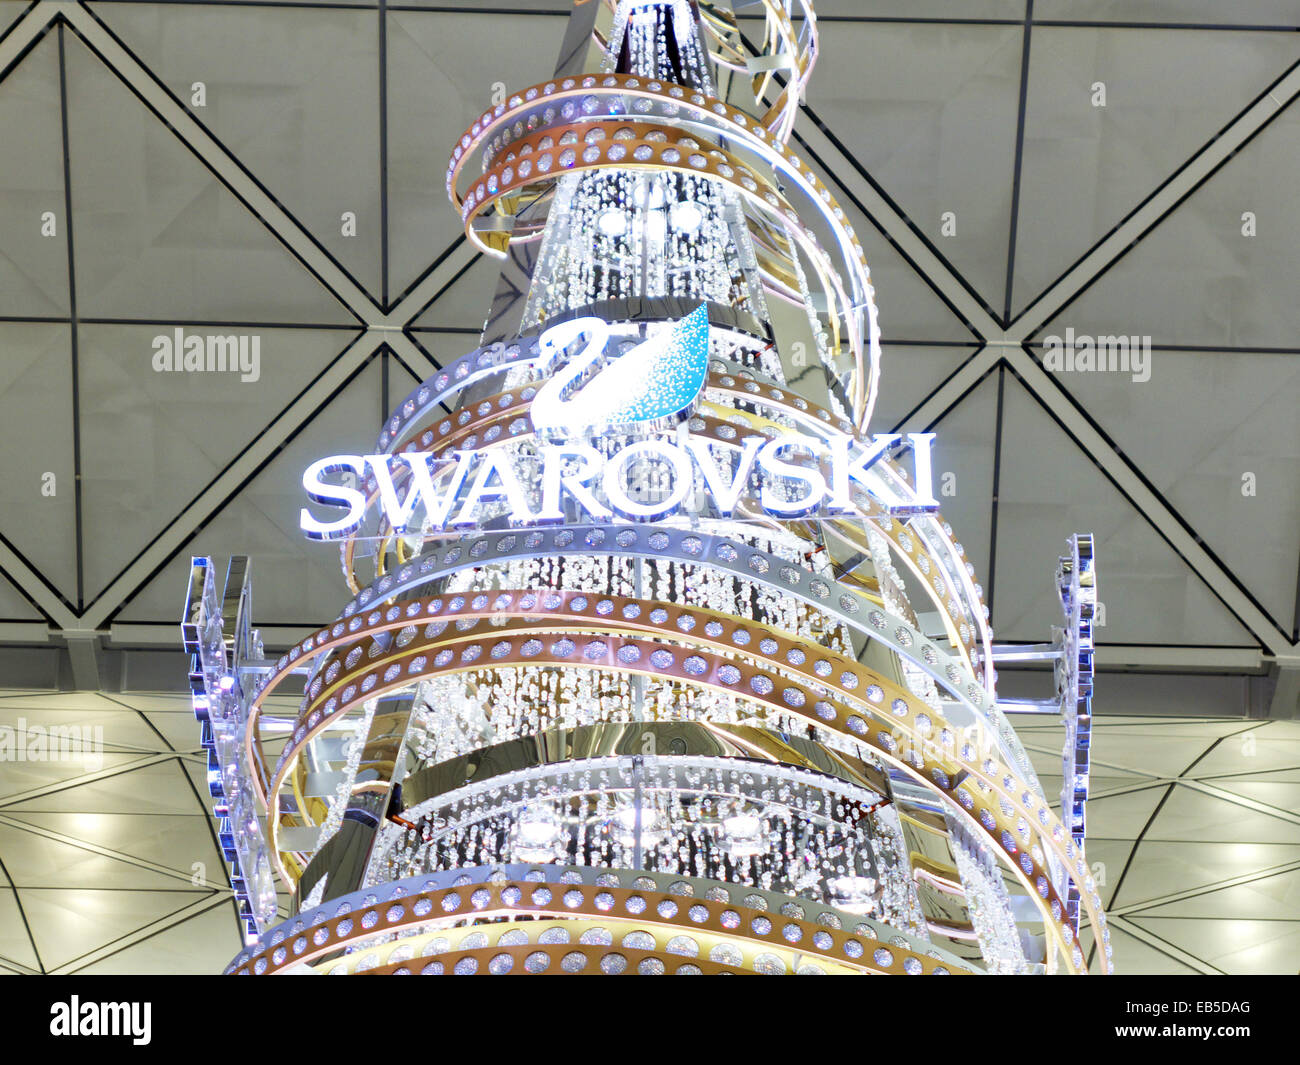 Swarovski display in Hong Kong International Airport Departure Hall Stock  Photo - Alamy